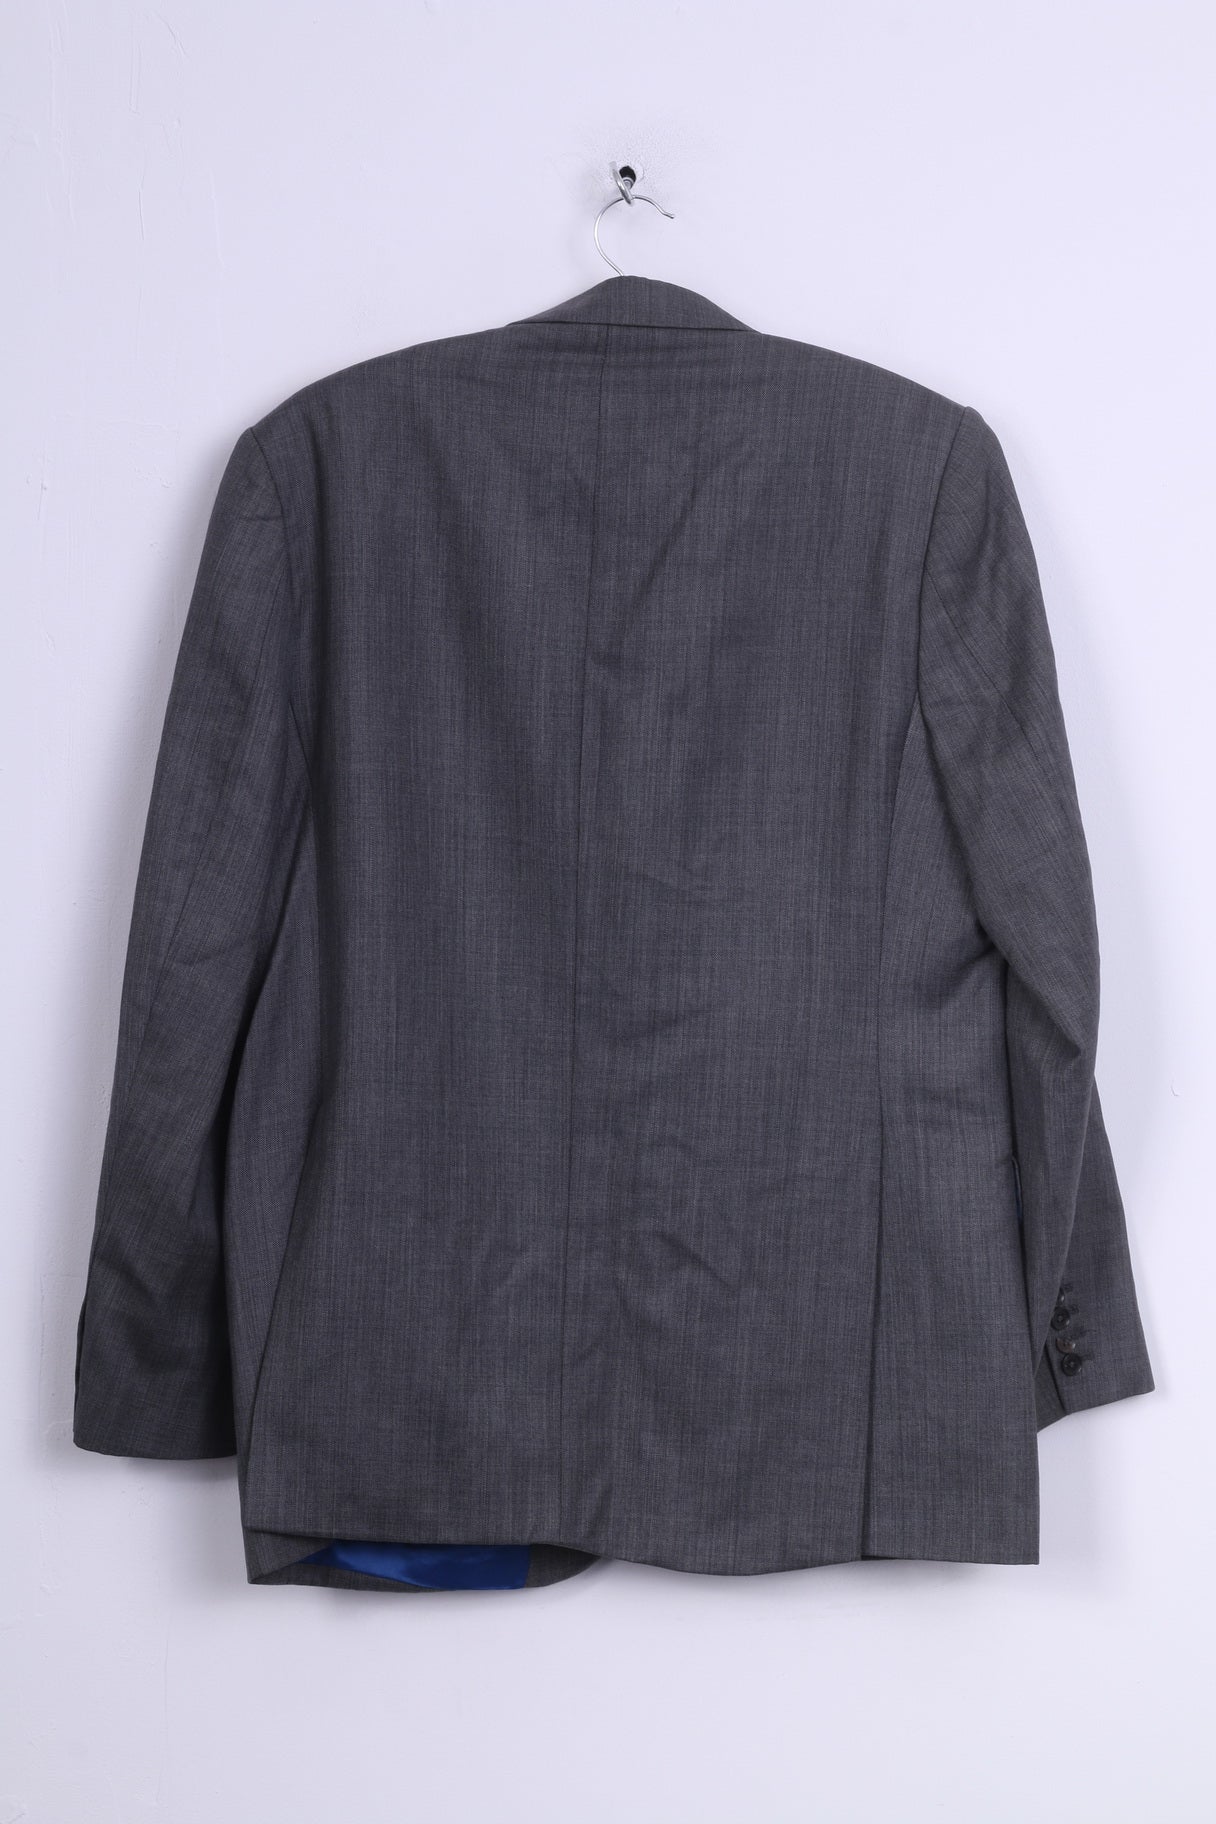 Charles Tyrwhitt Jermyn Street London Mens 44 L Blazer Jacket Wool Grey